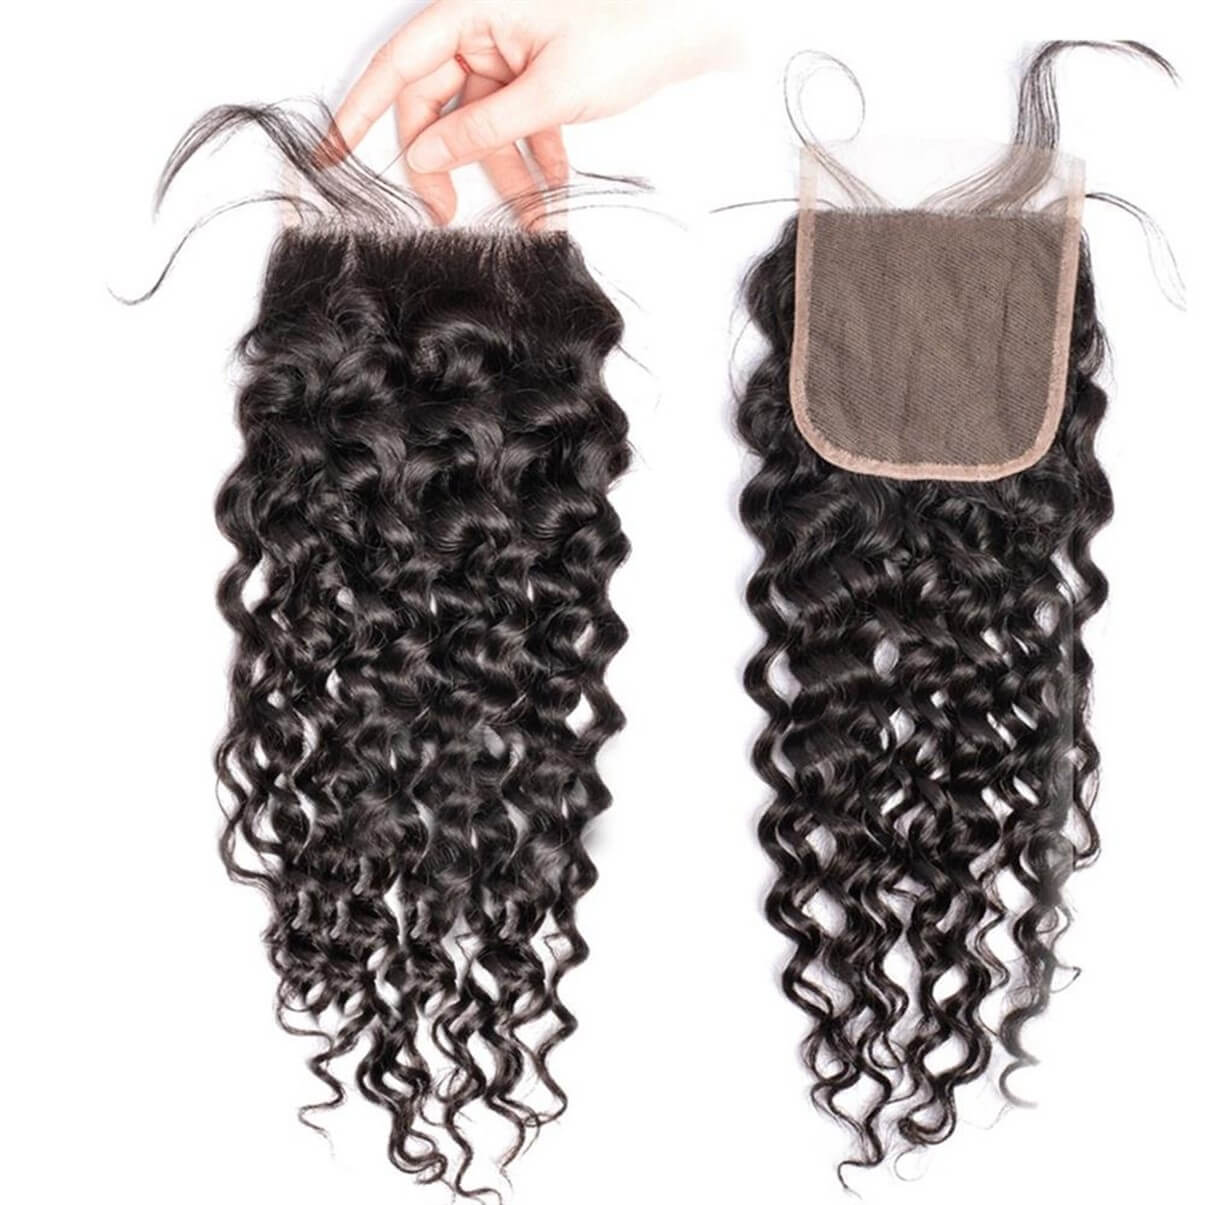 Lakihair 8A Brazilian Water Wave Hair 4 Bundles With Lace Closure 4x4 Virgin Human Hair Bundles